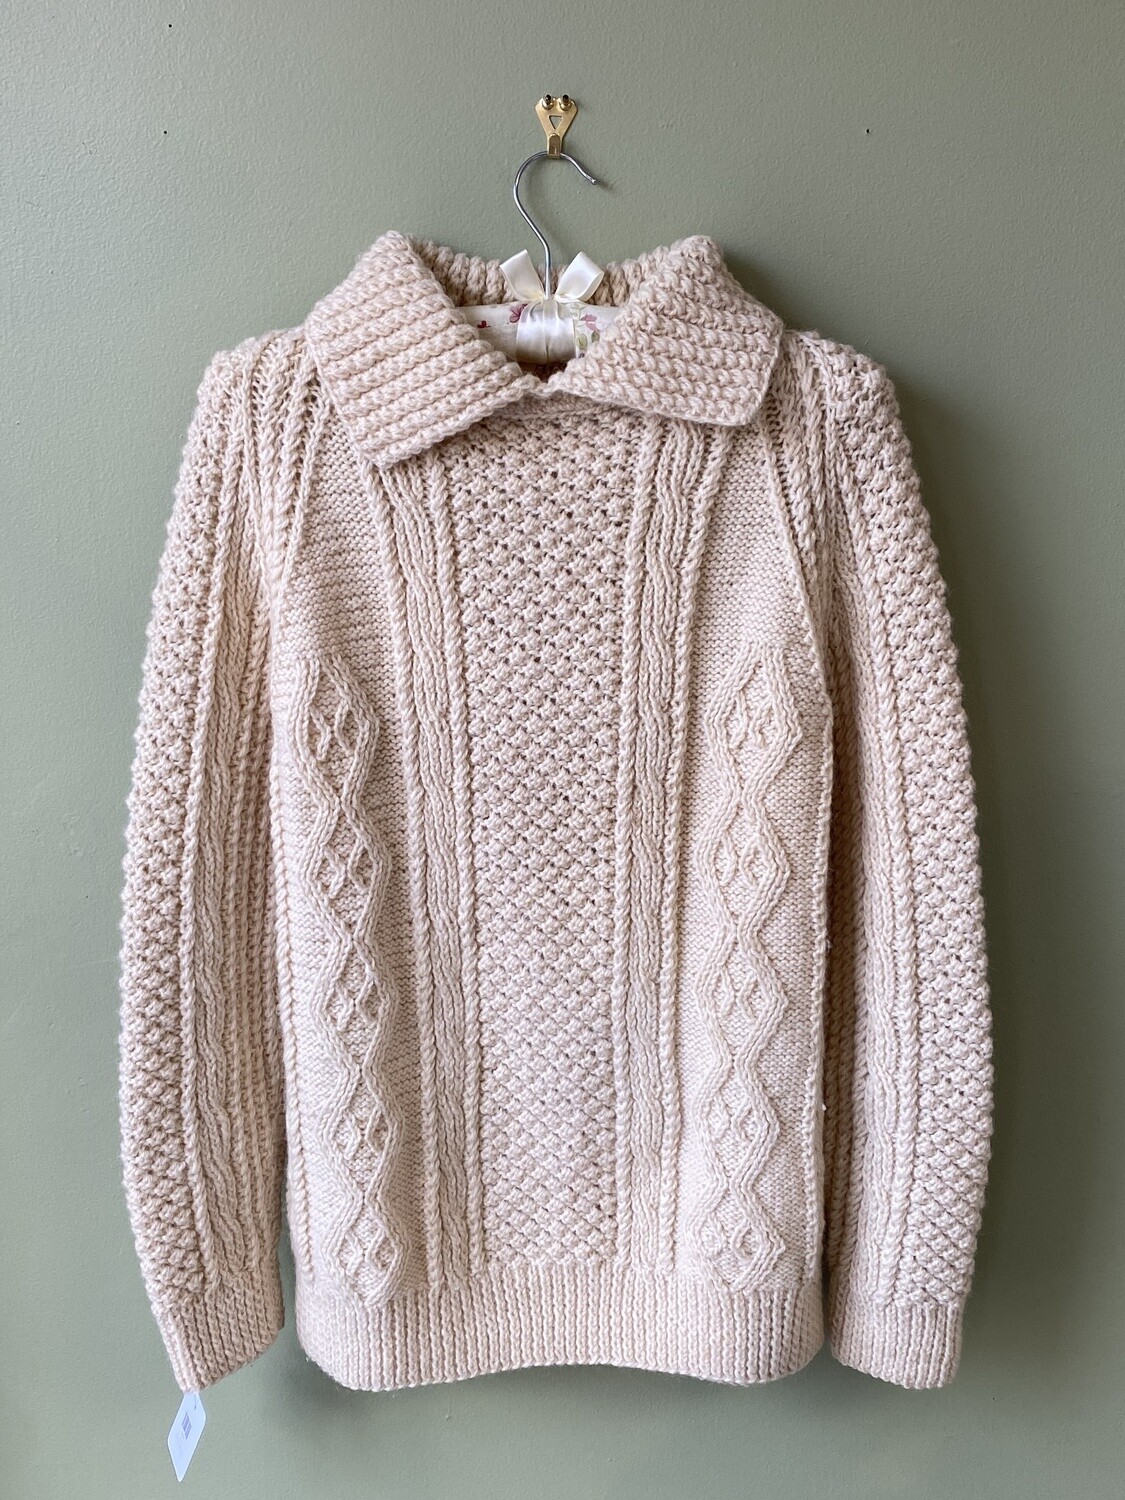 Hand-knit Mitchell's 100% Wool Irish Pull-over Sweater, Estimated Size M 